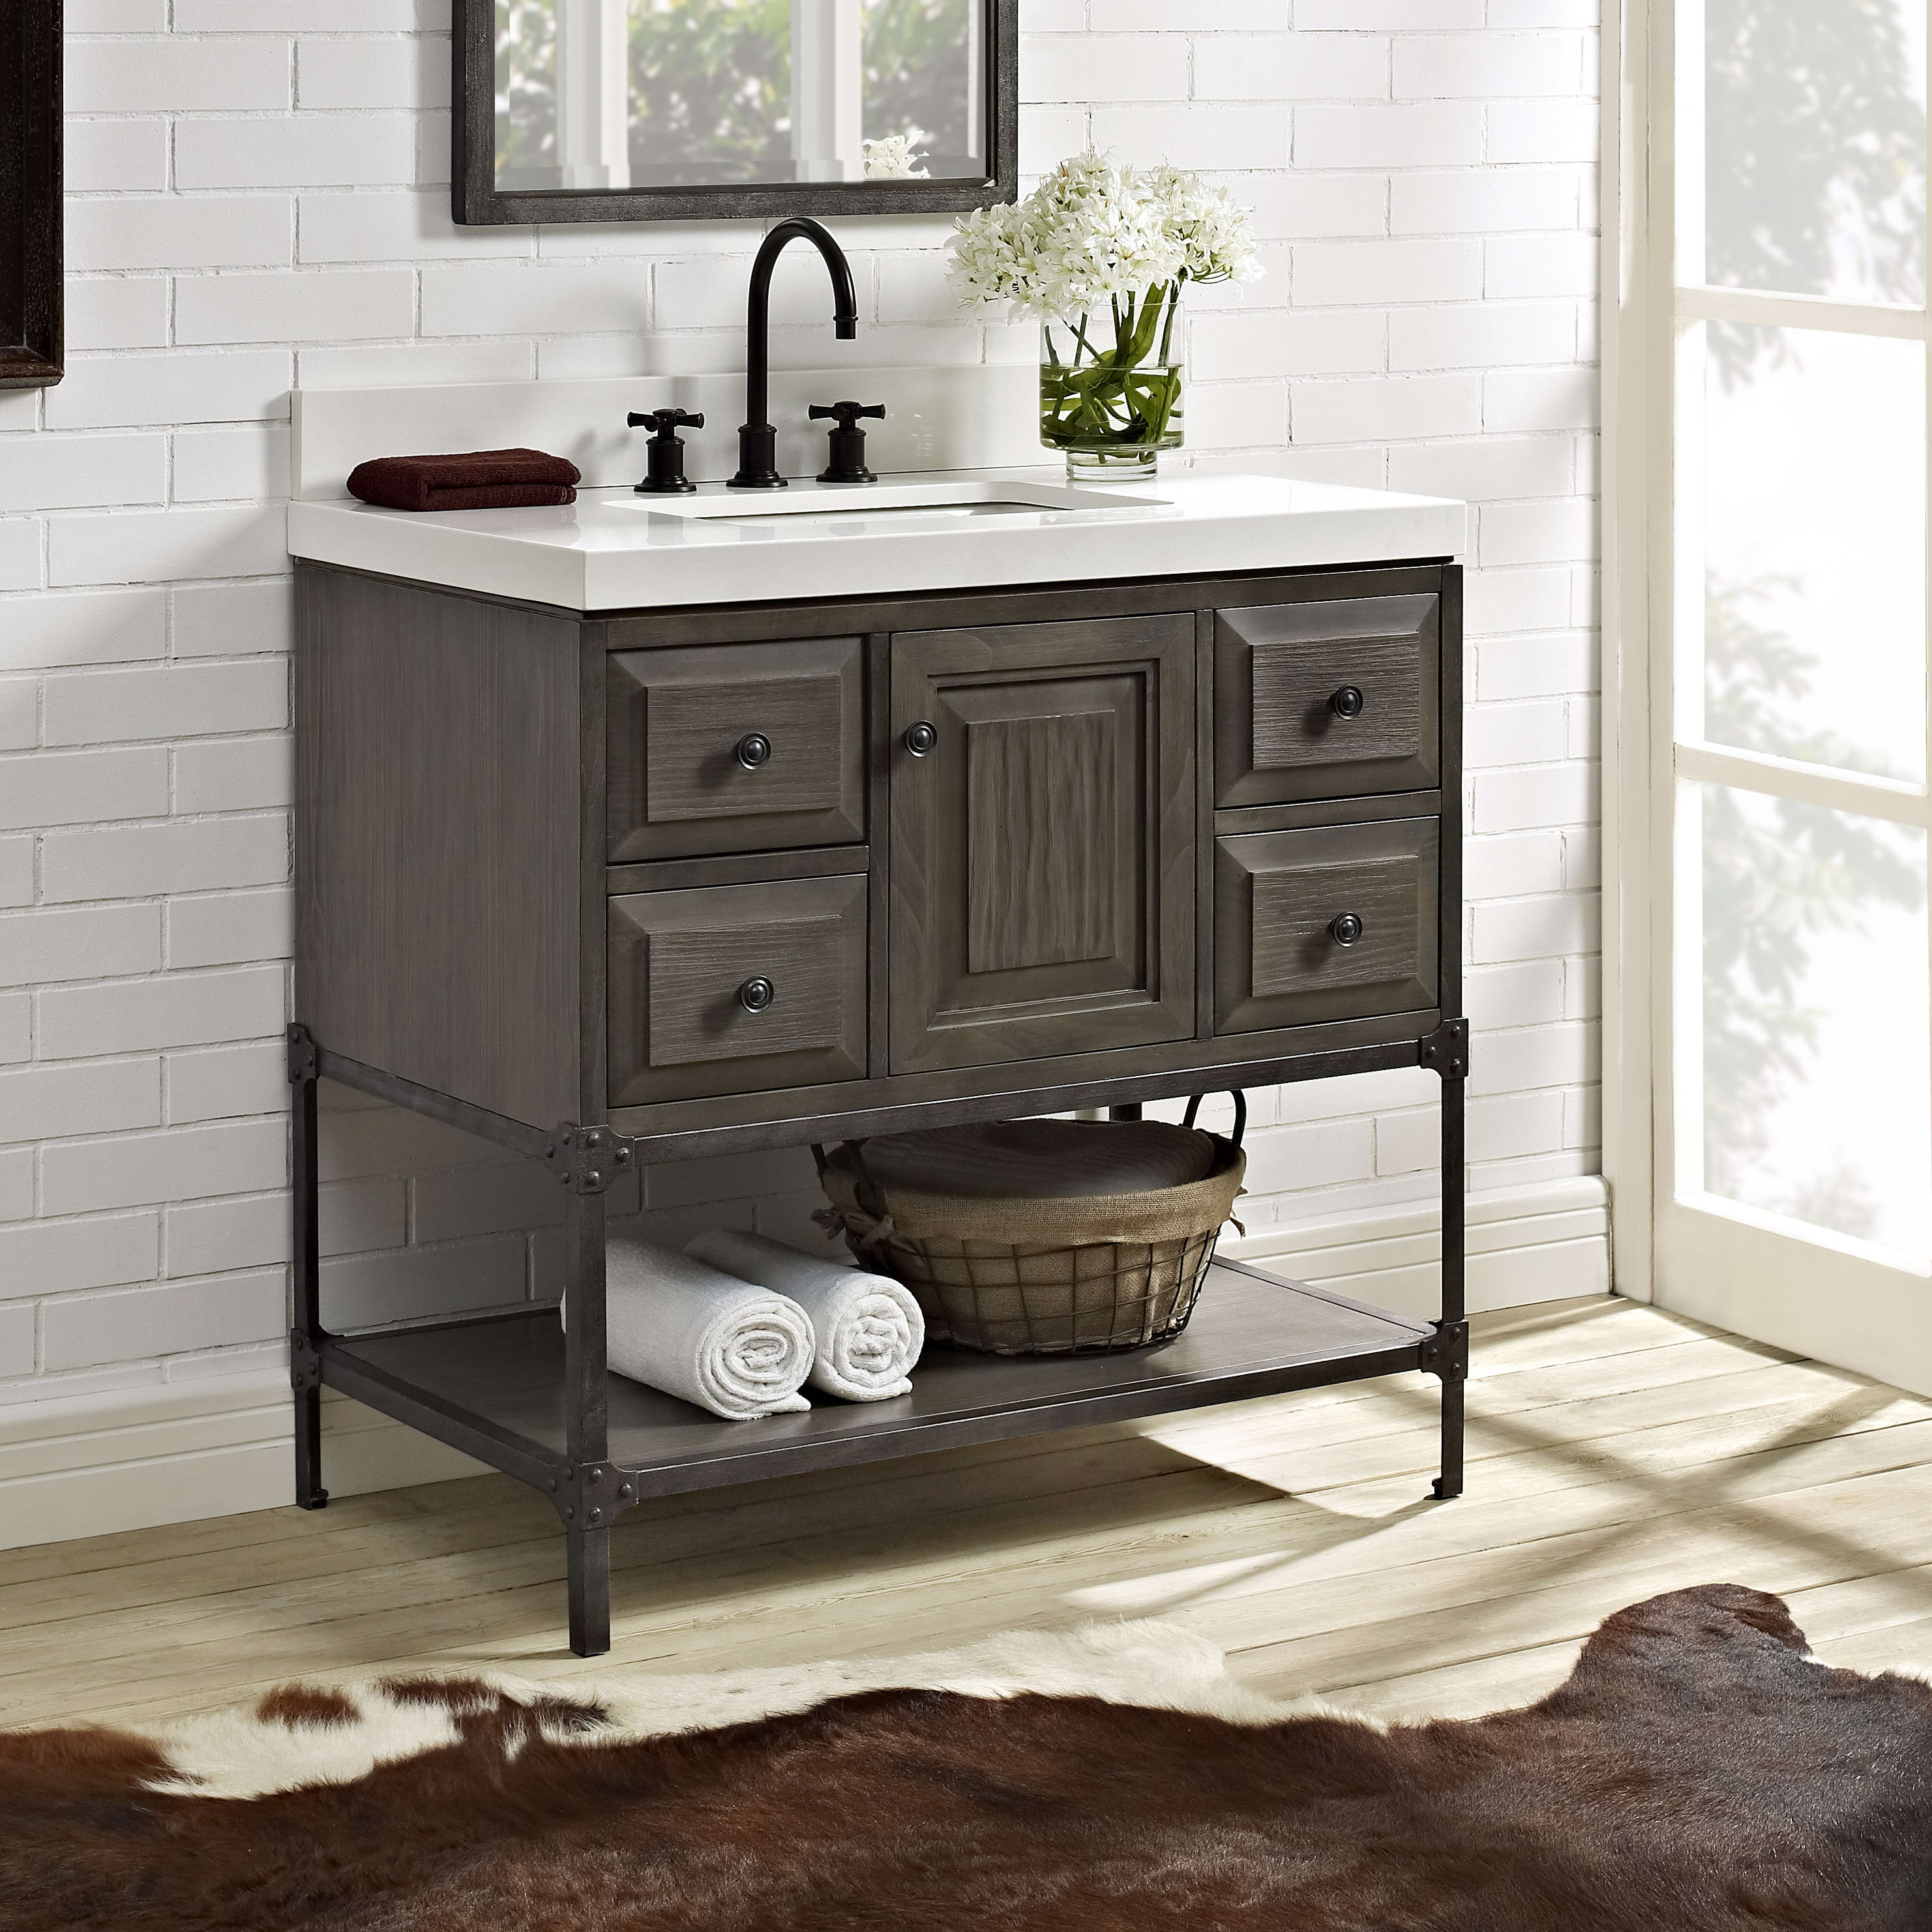 Fairmont Designs 1401 36 Toledo 1 2, 36 Inch Driftwood Bathroom Vanity Units